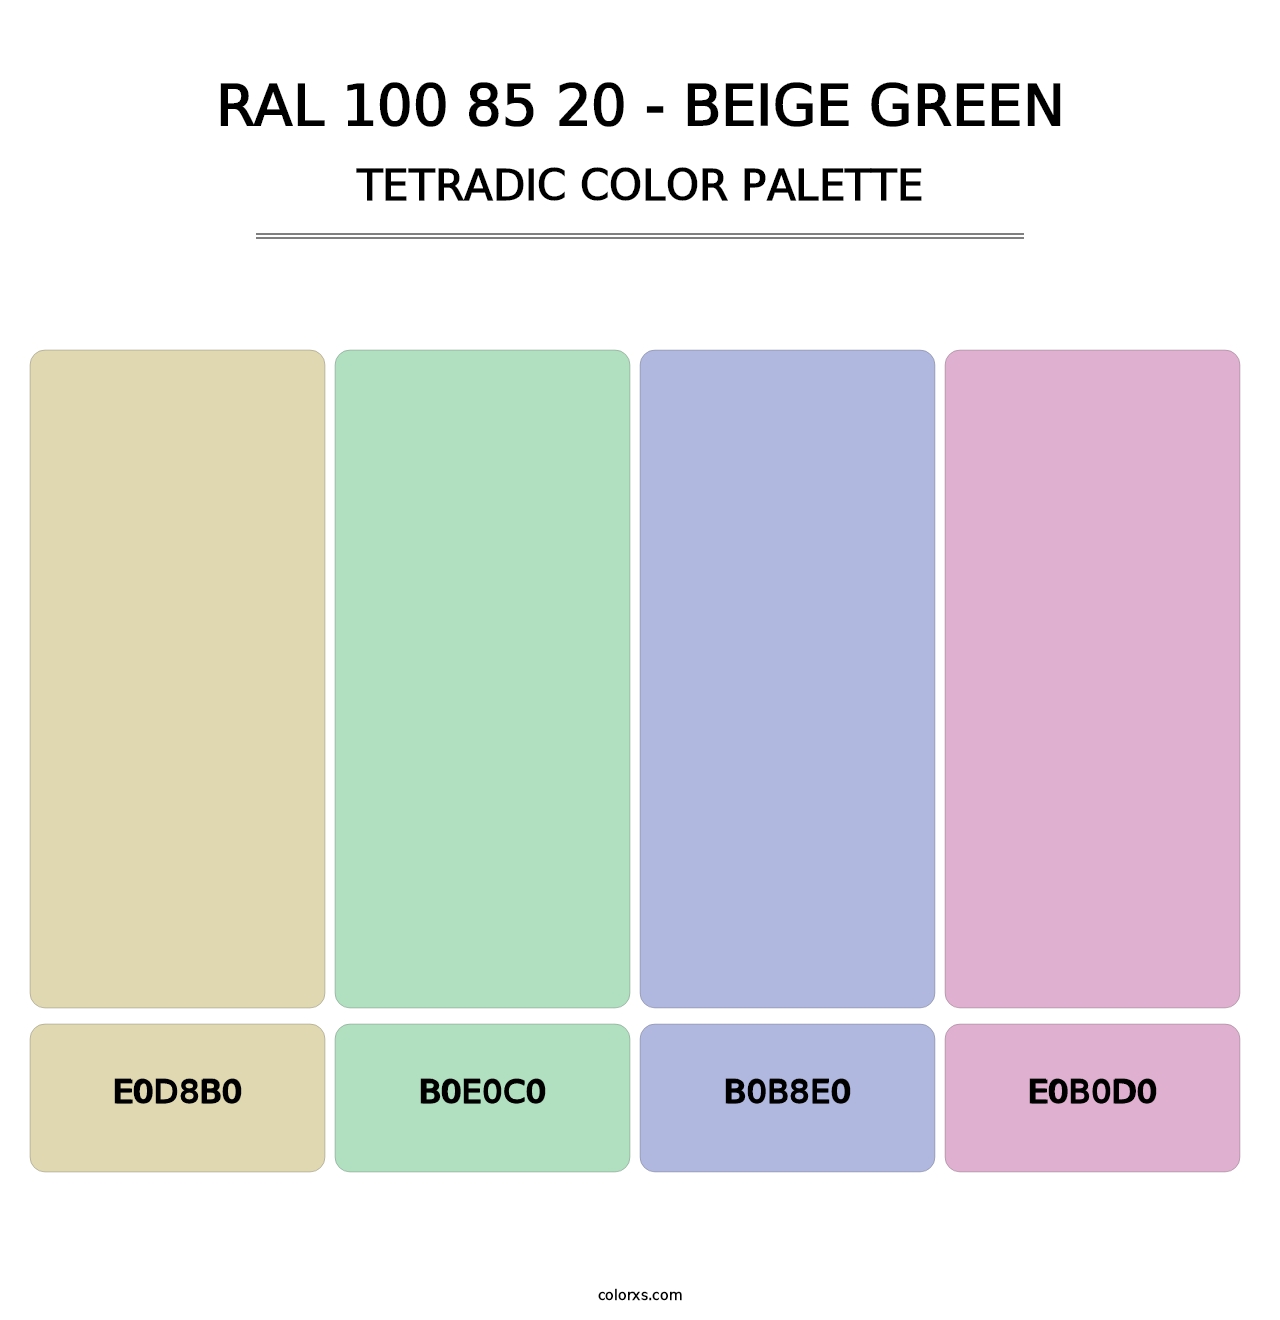 RAL 100 85 20 - Beige Green - Tetradic Color Palette